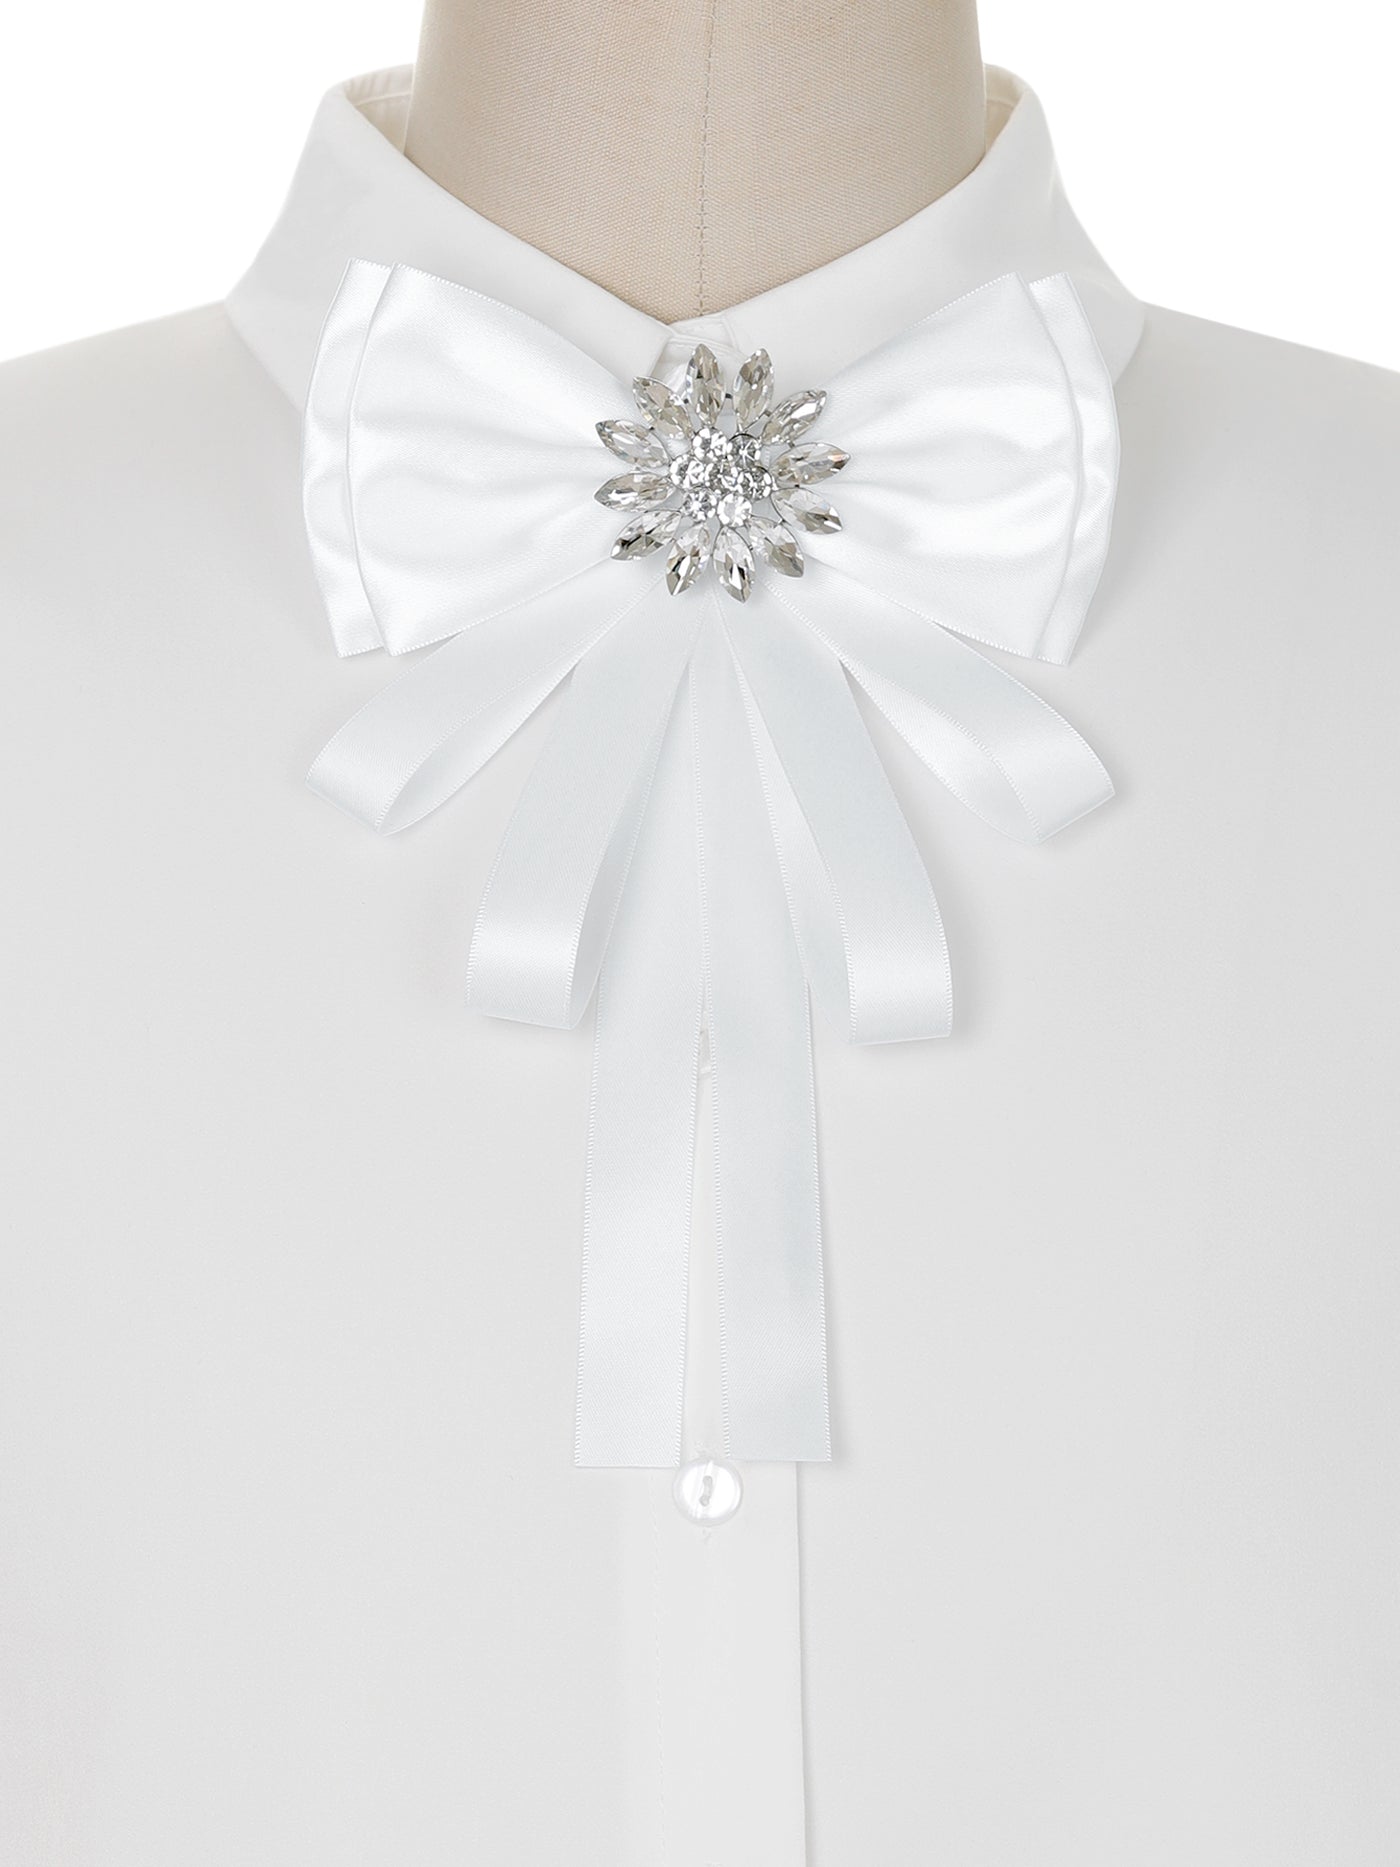 Bublédon Women's Prom Bowknot Rhinestone Shirt Dress Collar Neck Tie Brooch